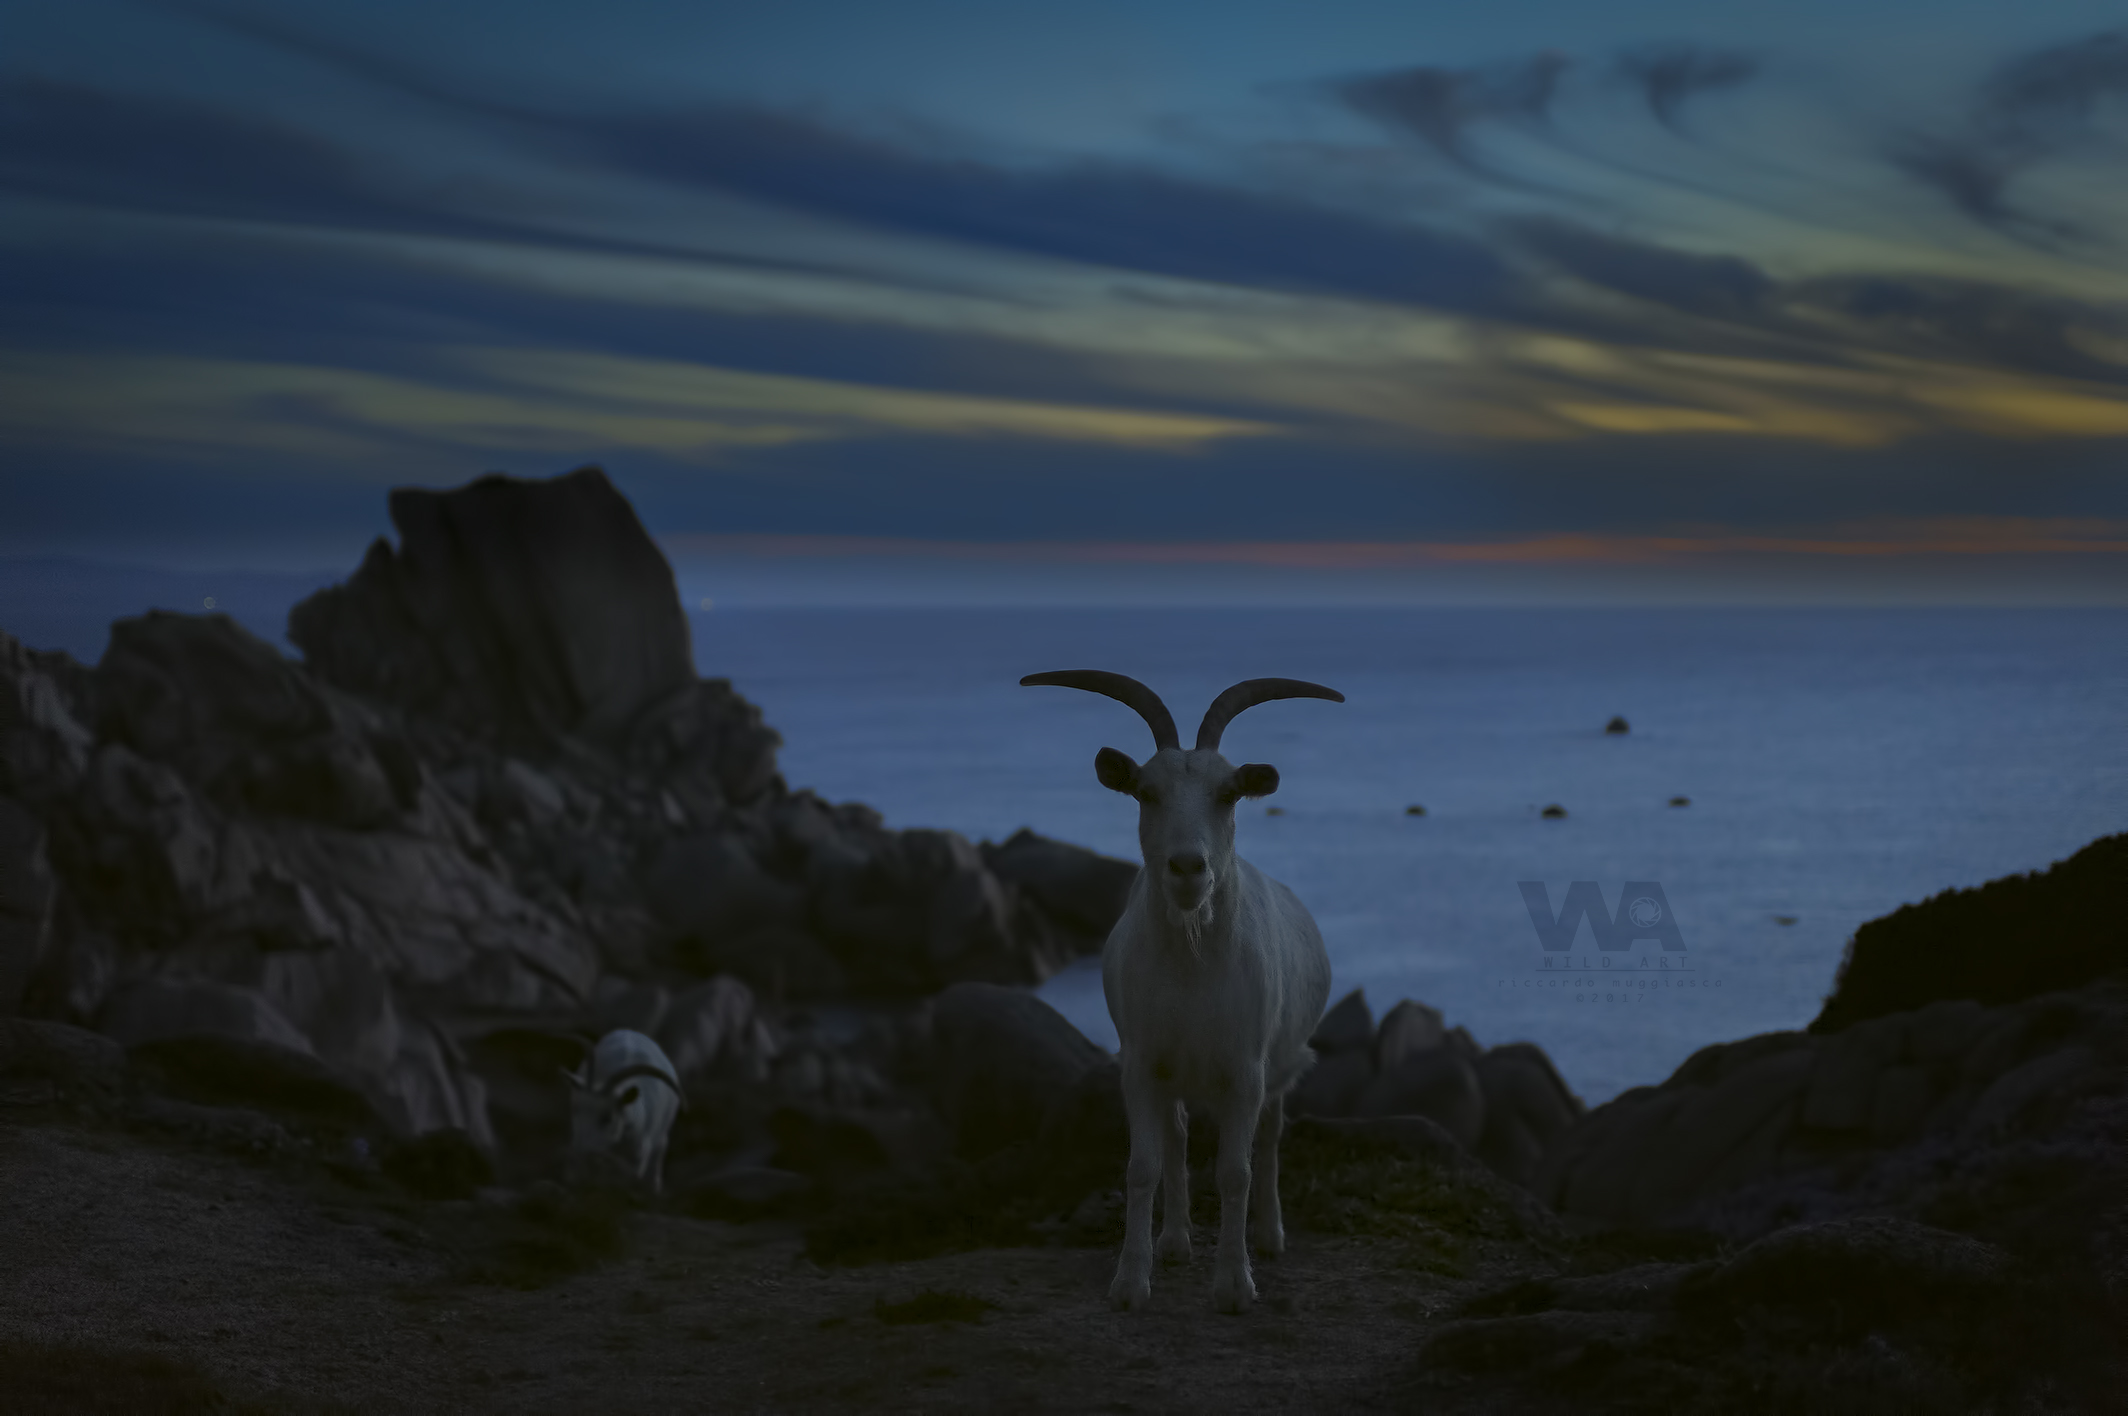 Wild goats at sunset...